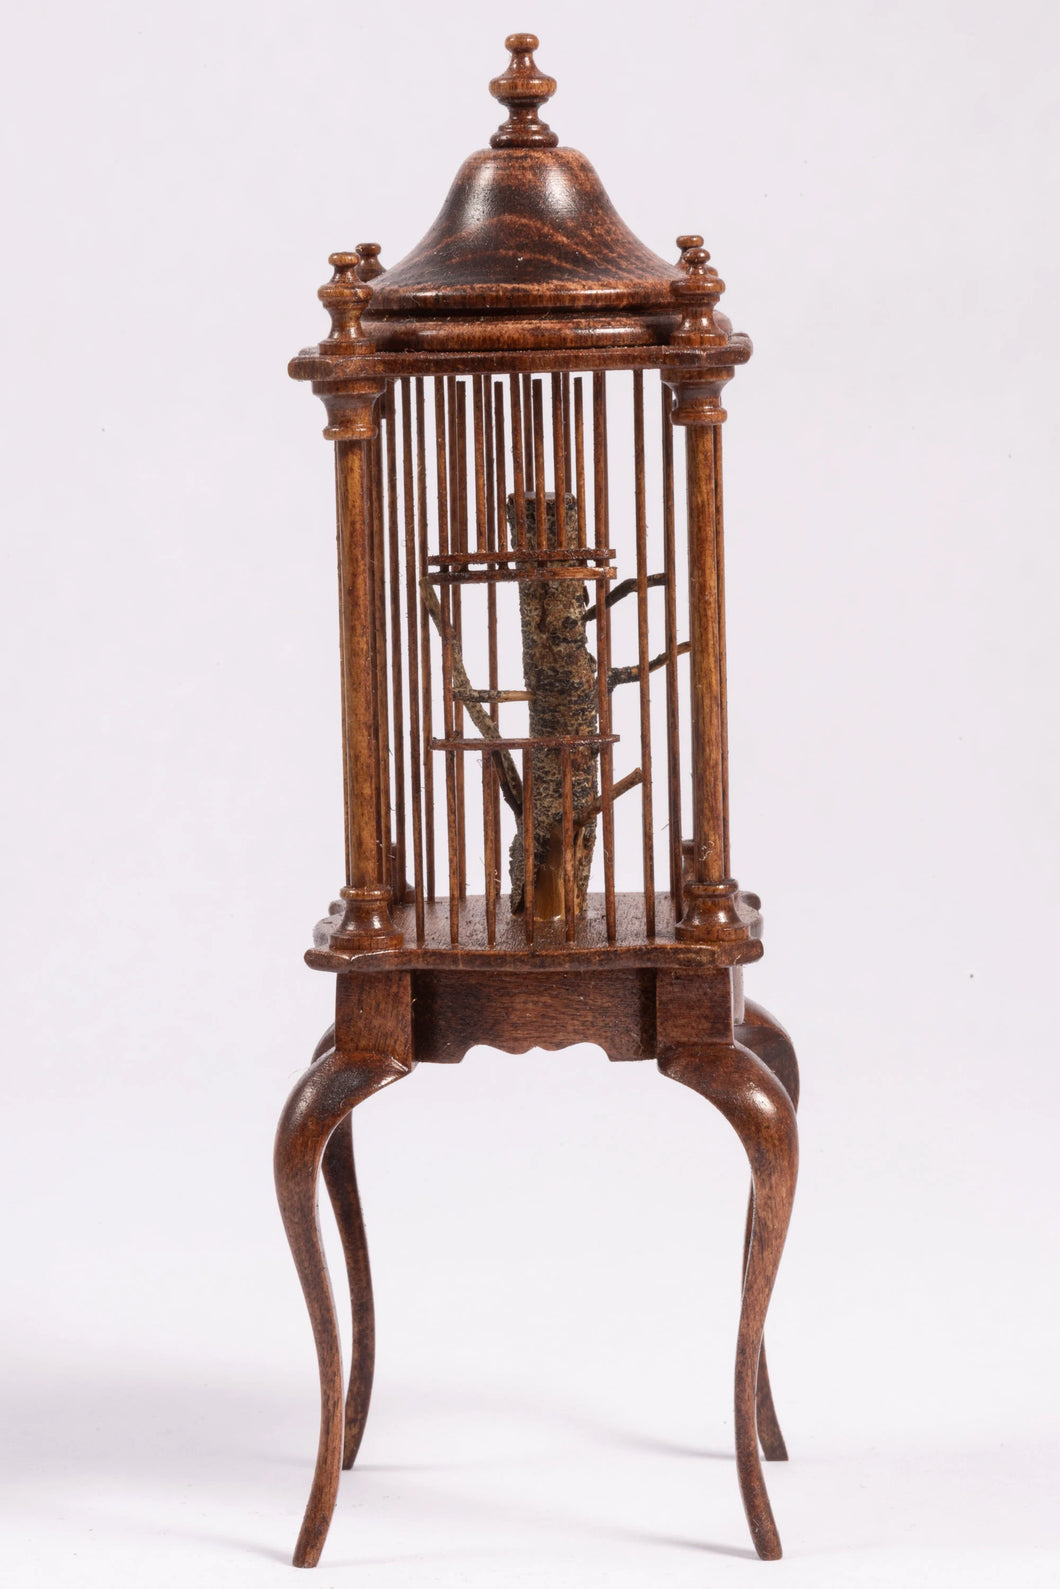 David Krupick Wonderful Handmade Wooden Birdcage - Opening Works Nicely